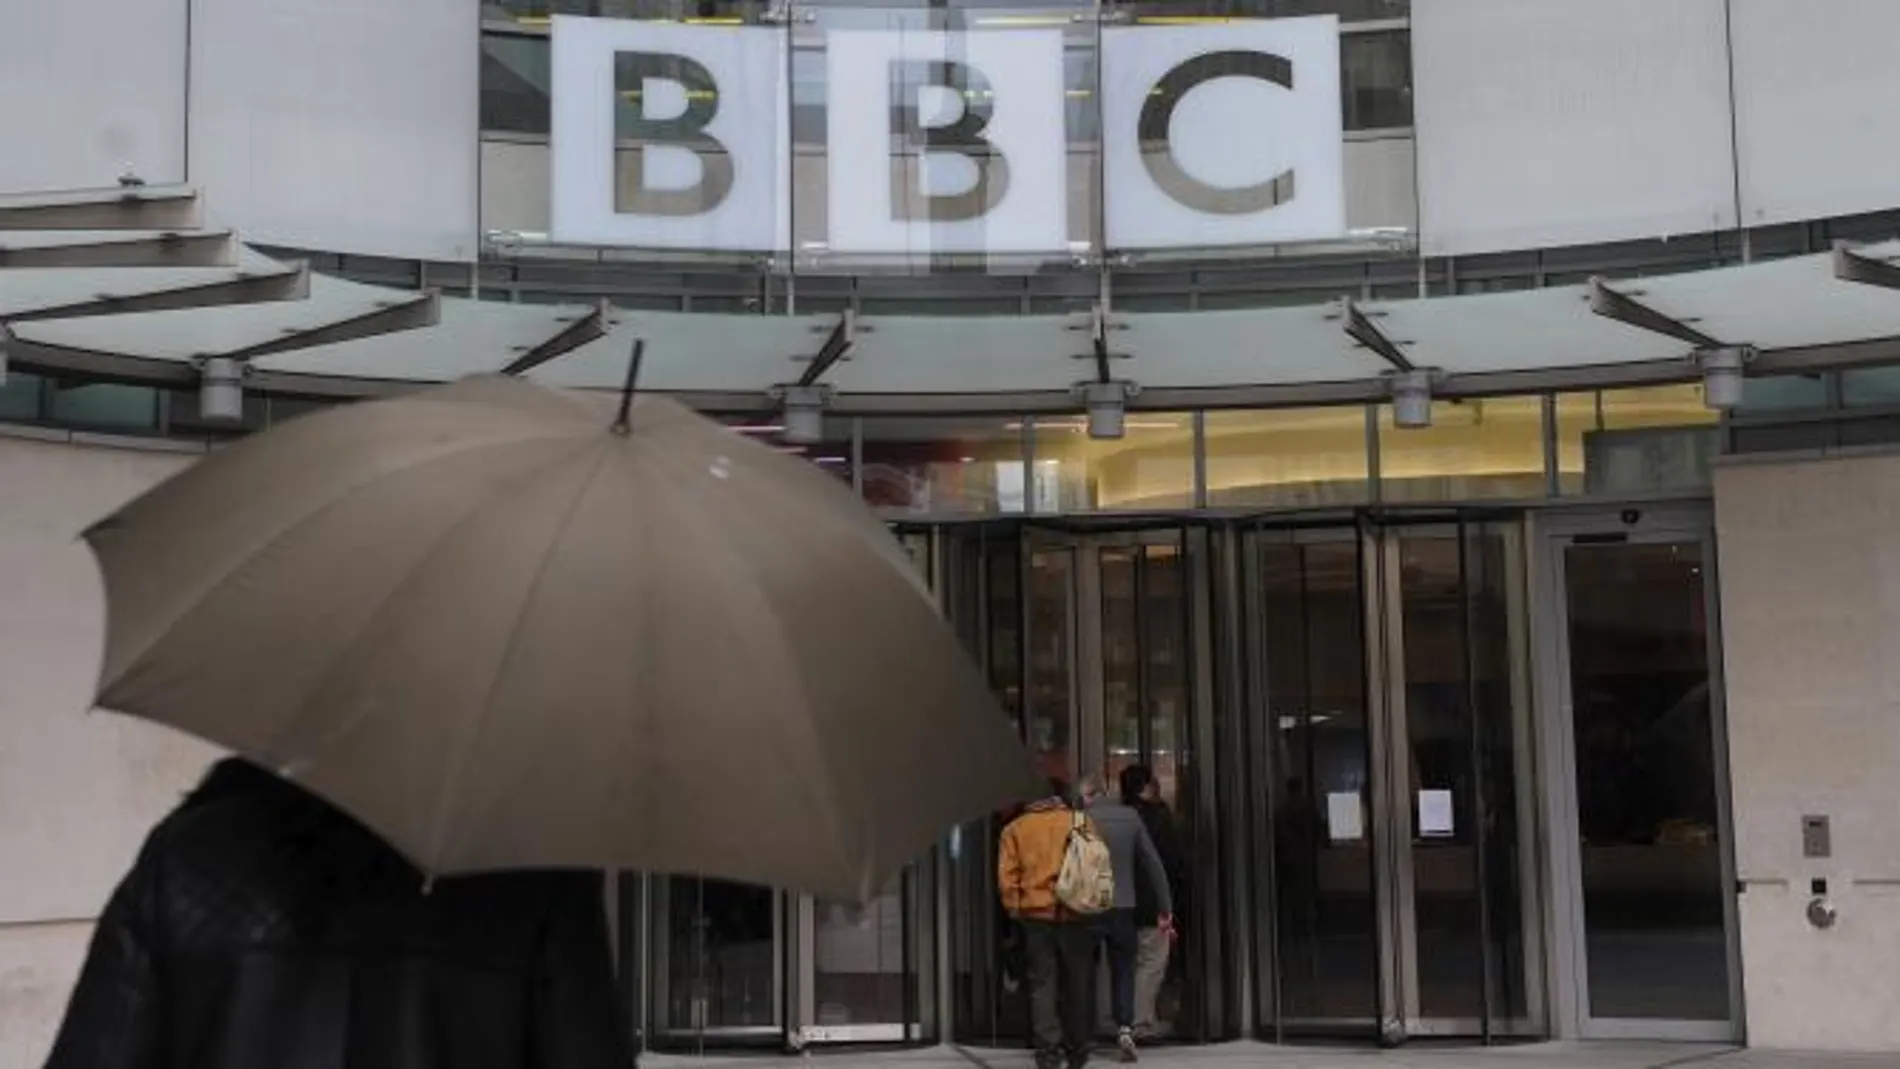 Vista exterior de la New BBC Broadcasting House, sede de la cadena BBC, en el centro de Londres.